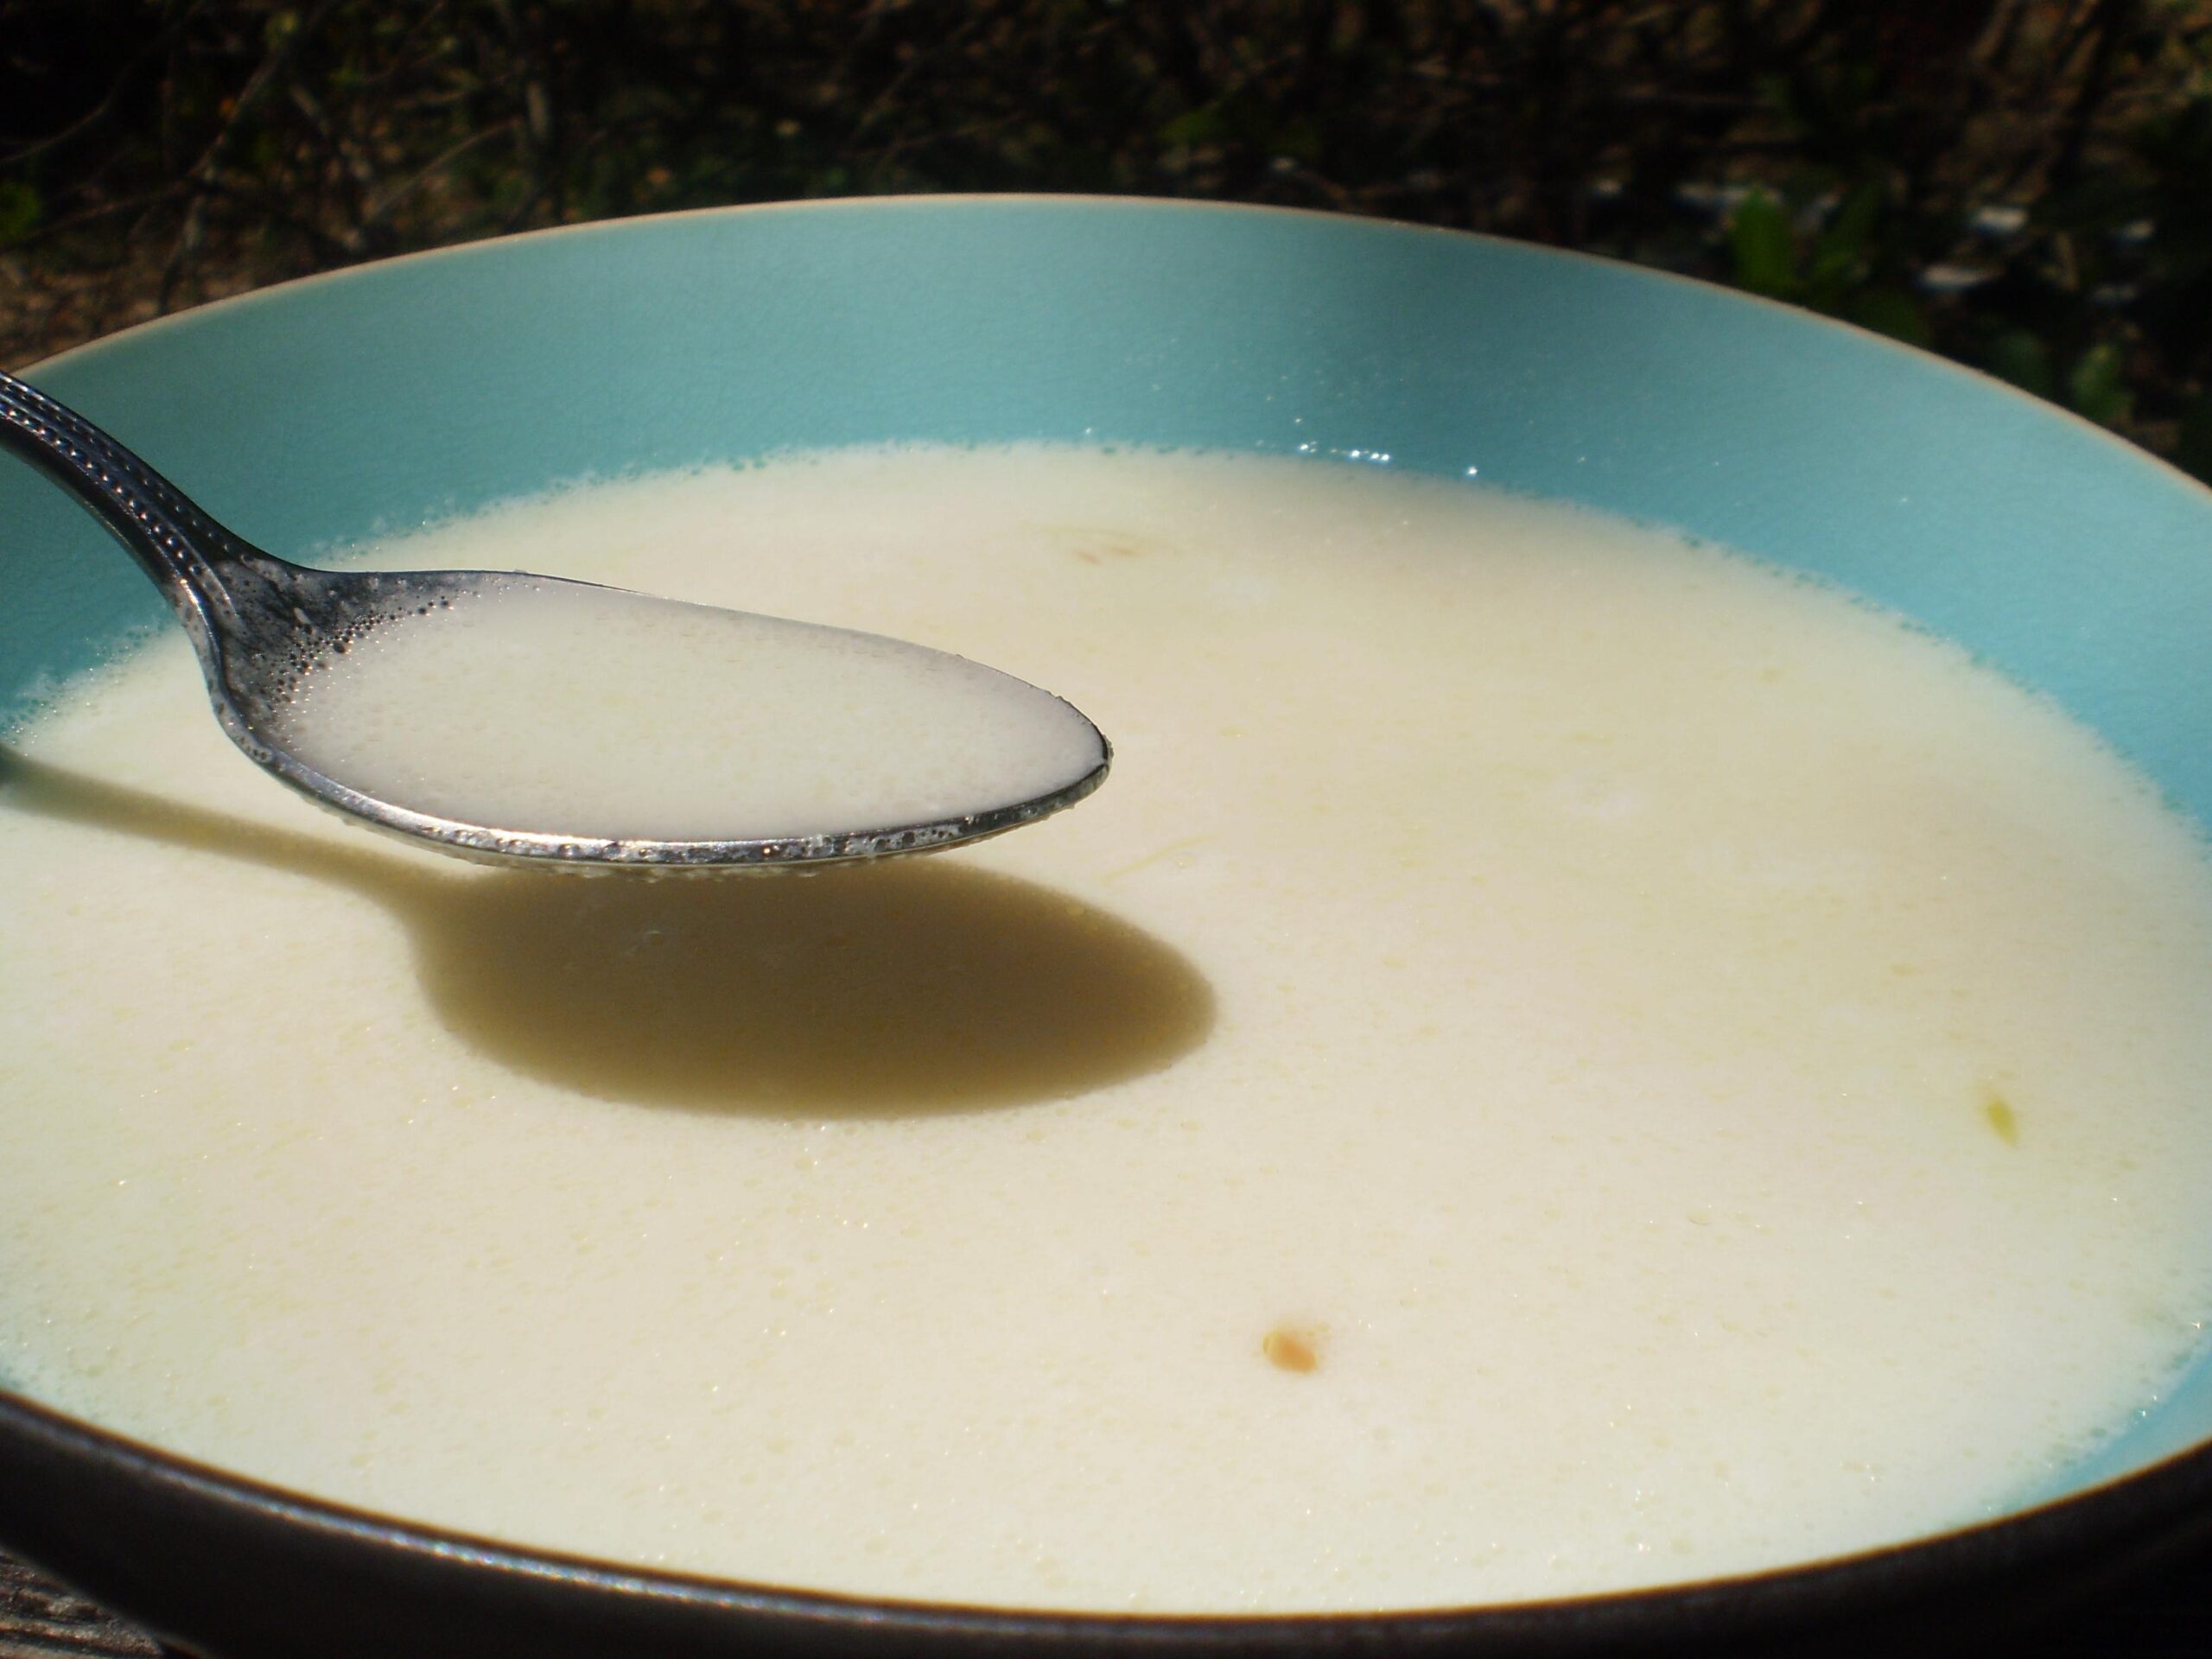 Delectable Portuguese Soup: Potato & Garlic Recipe